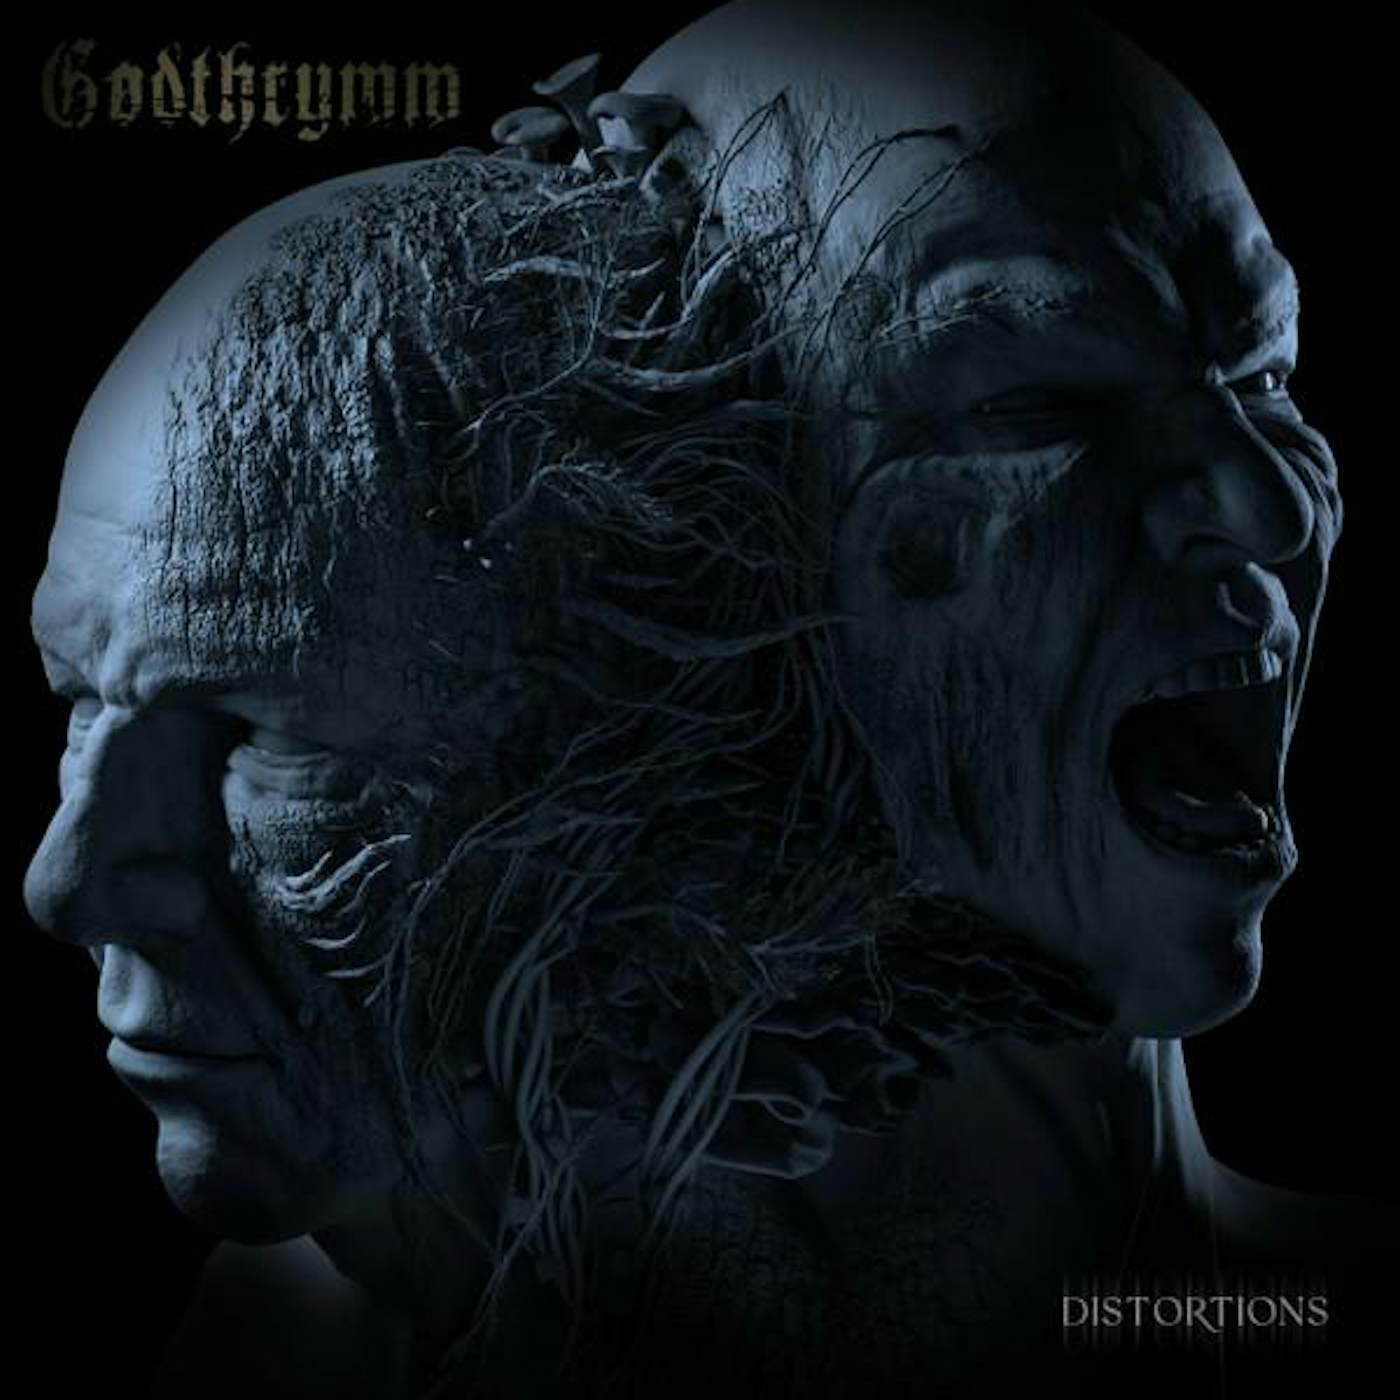 Godthrymm DISTORTIONS CD